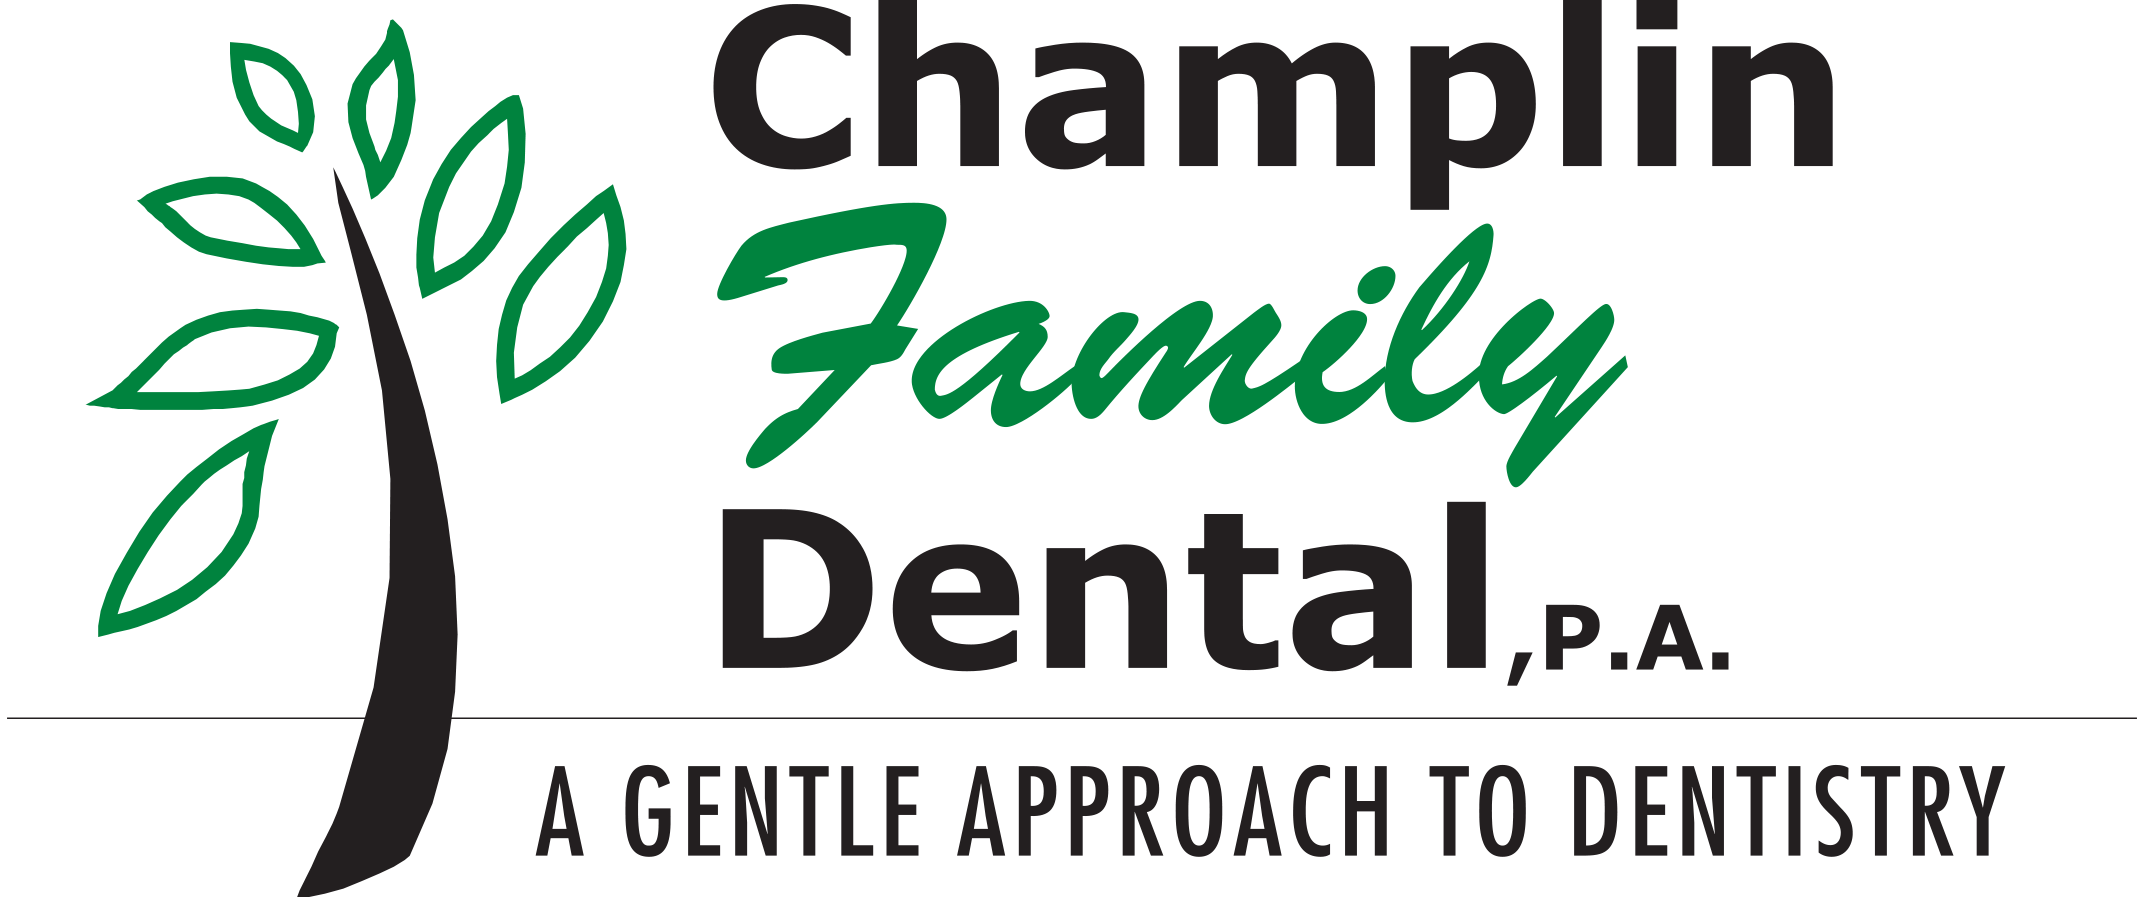 Champlin Family Dental.png